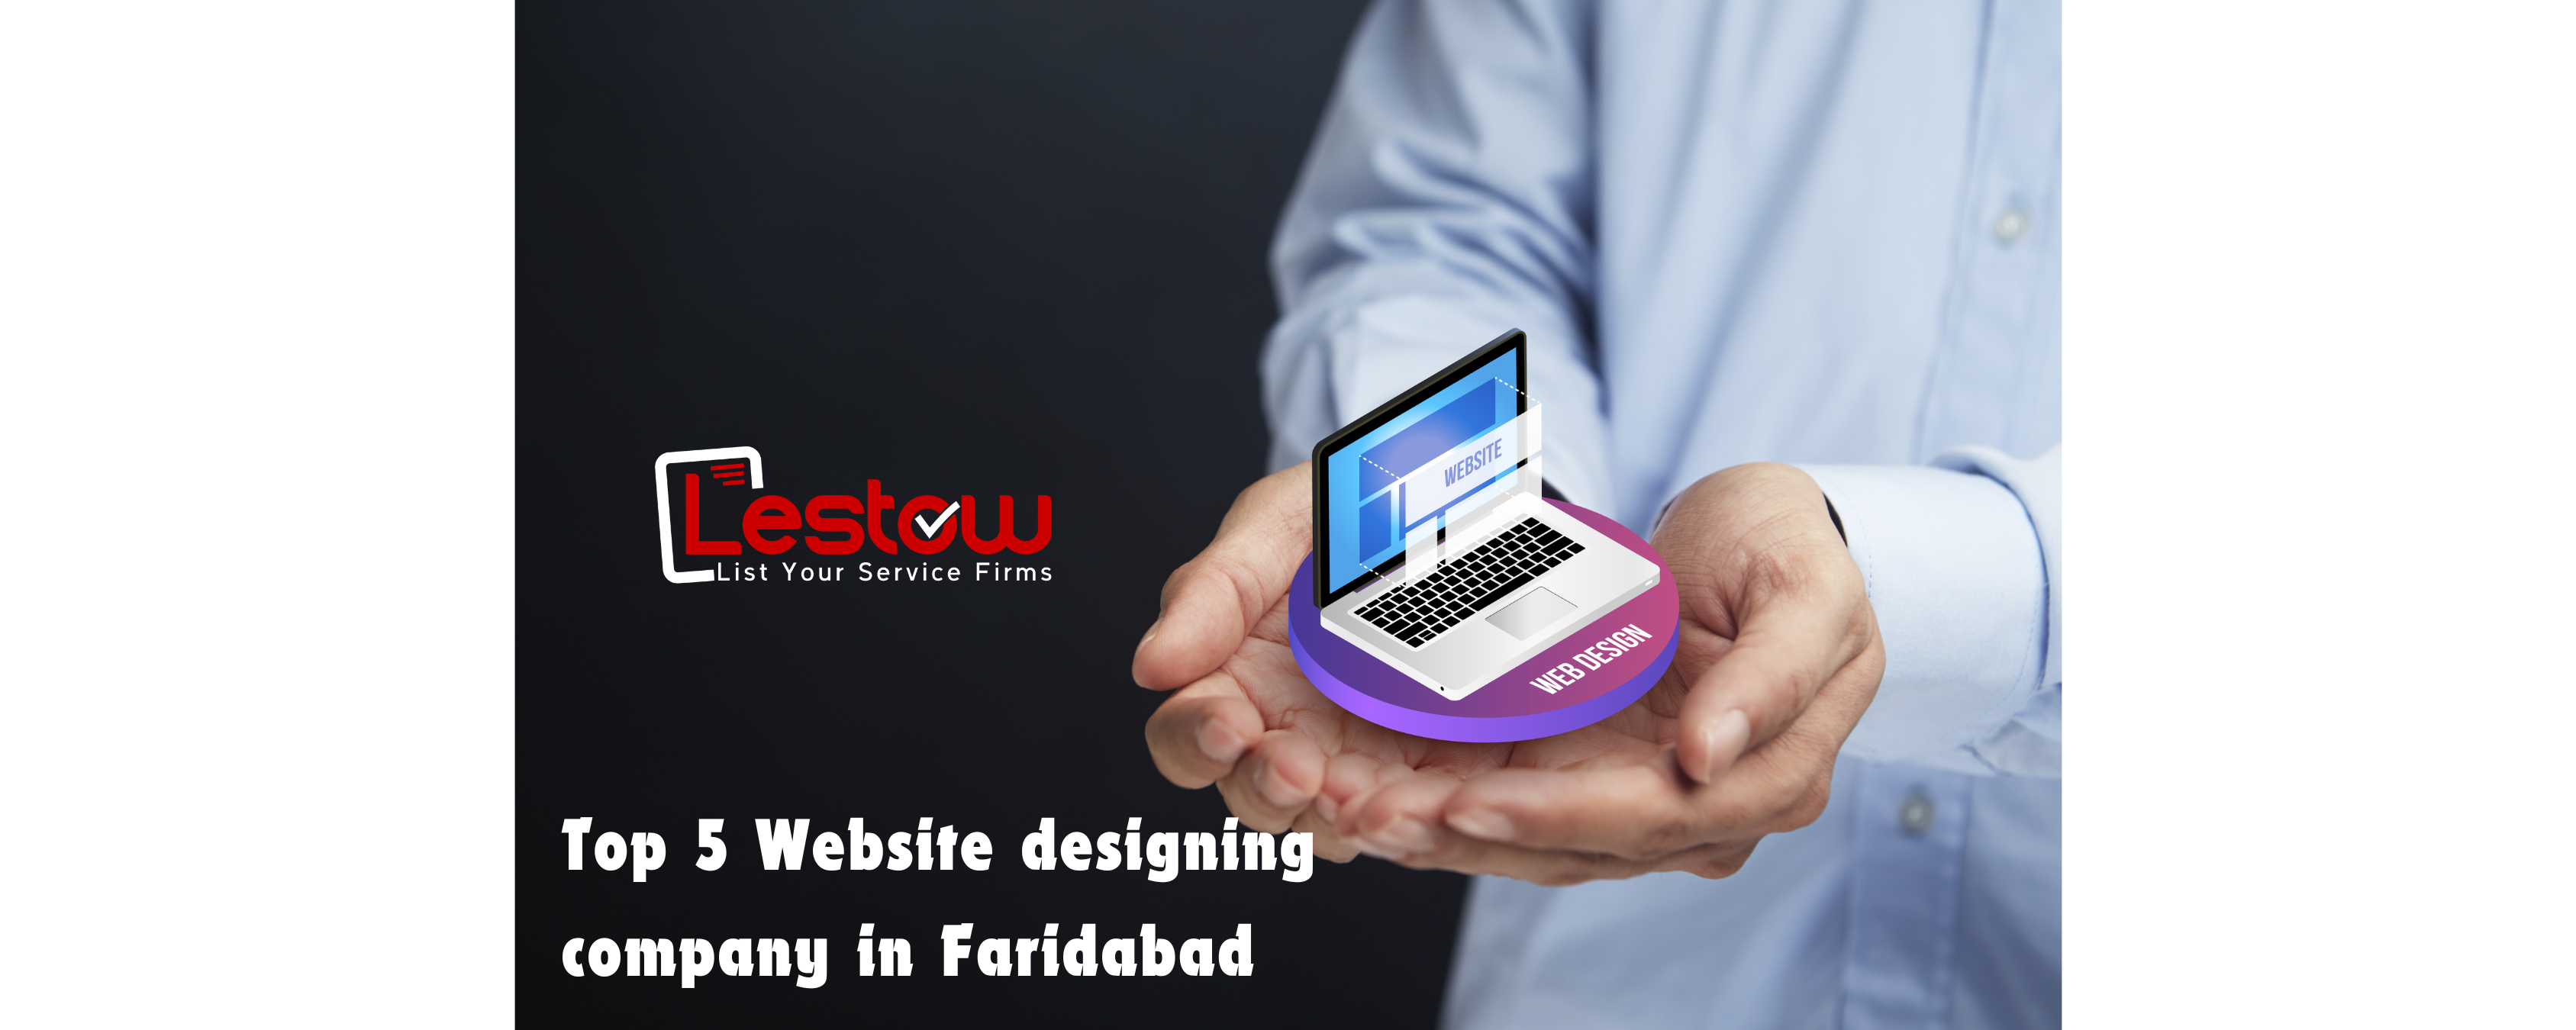 Top 5 website designing companies in Faridabad